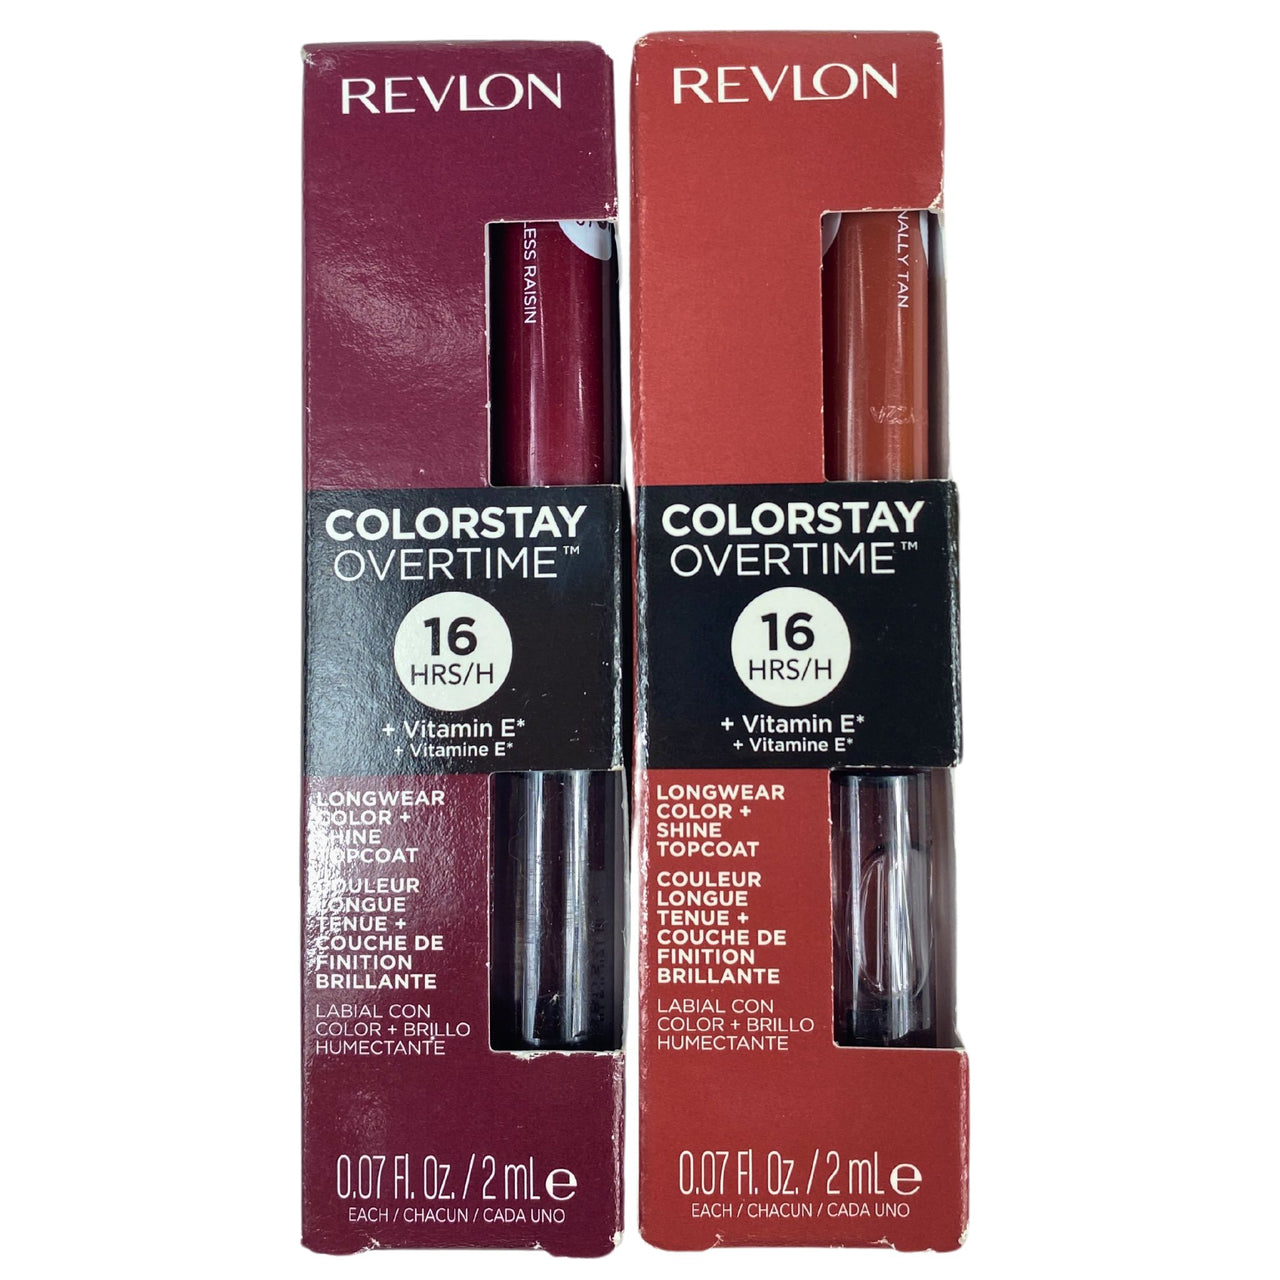 Revlon Colorstay Overtime 16HRS + Vitamin E Longwear Color + Shine Topcoat